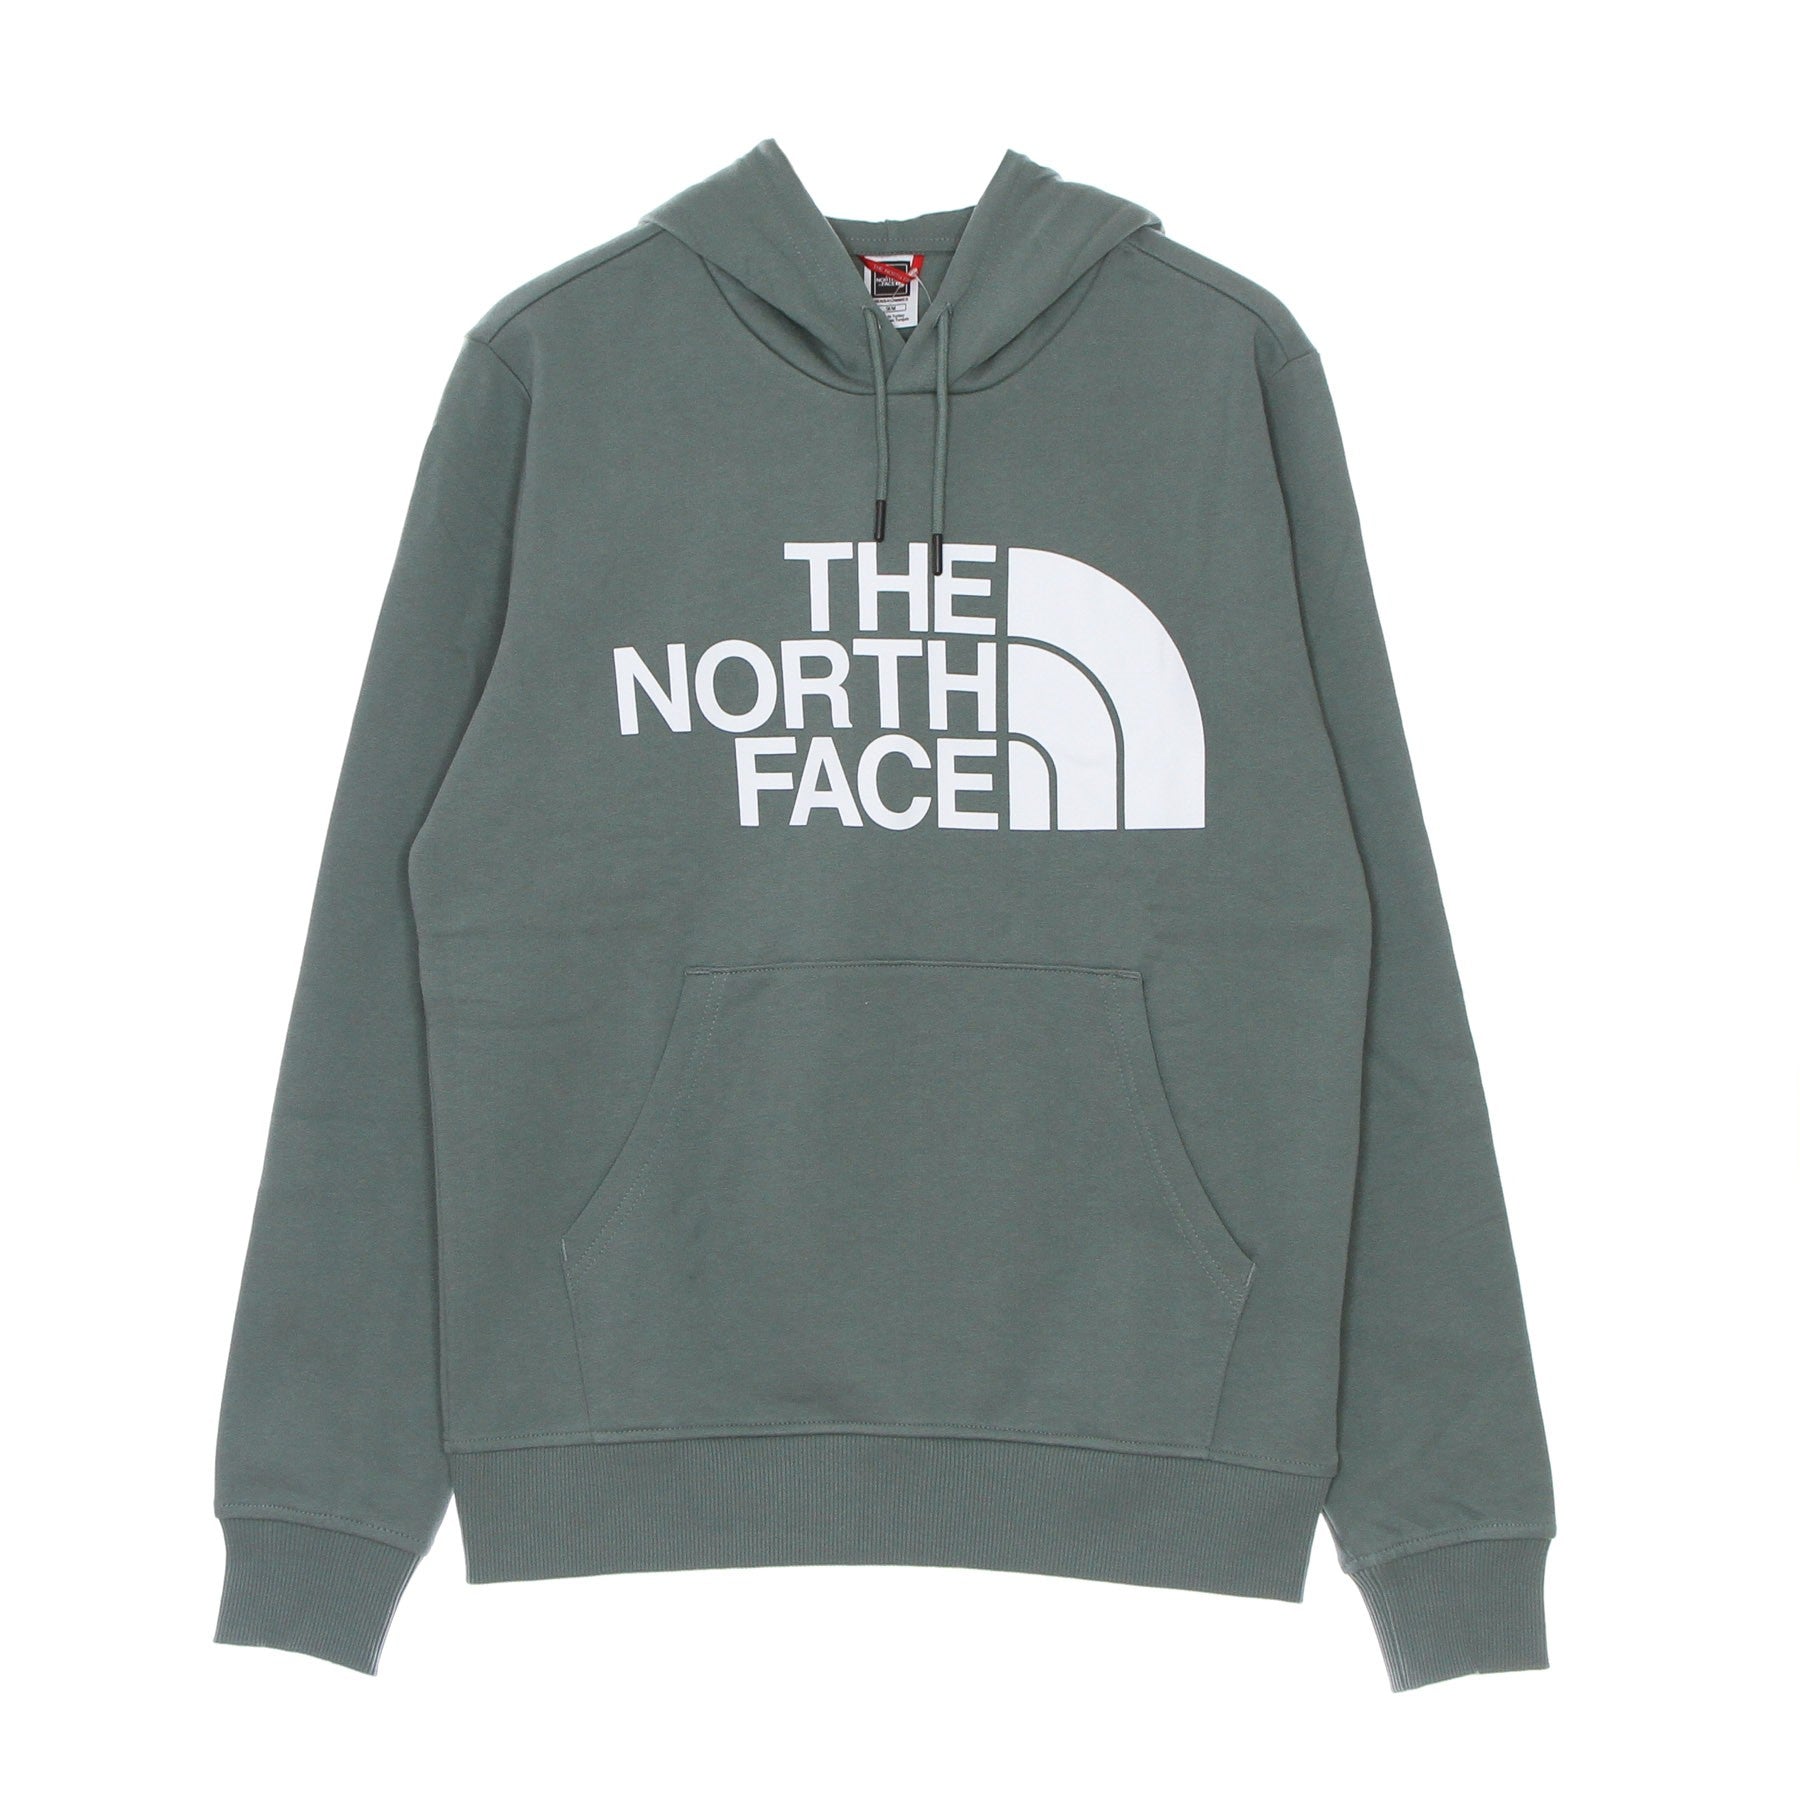 The North Face, Felpa Cappuccio Uomo Standard Hoodie, Balsam Green